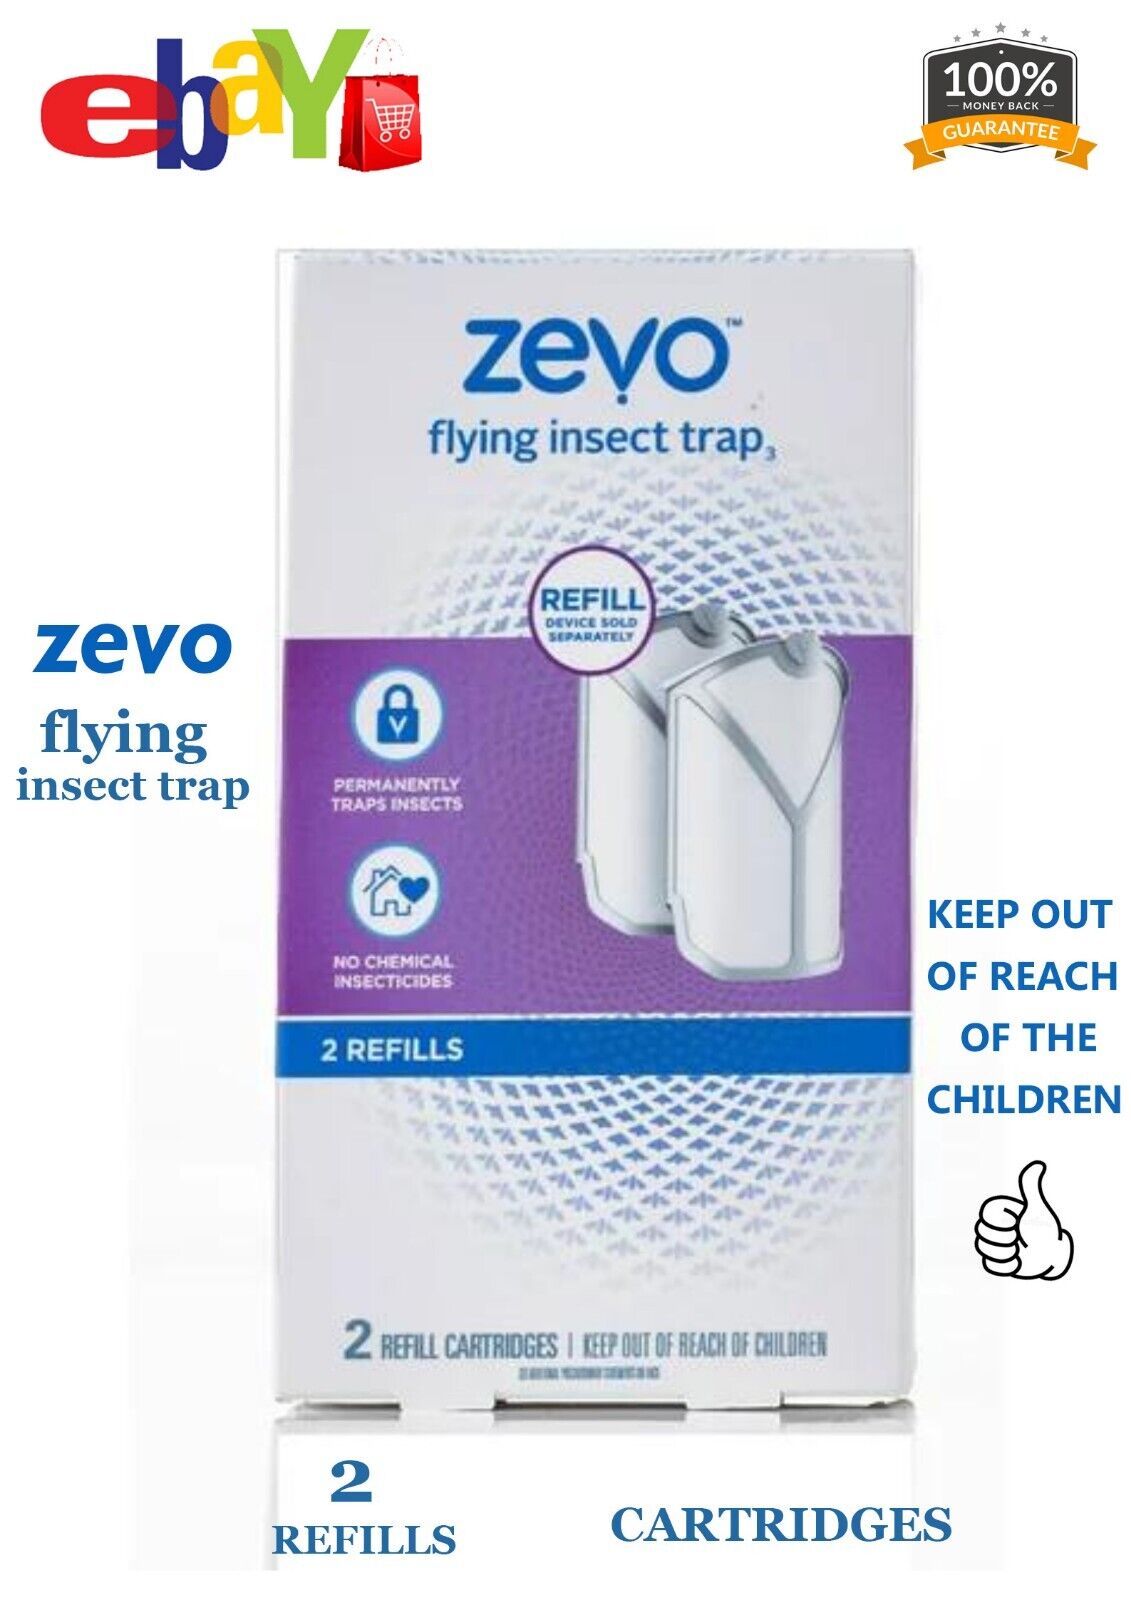 2-Refills Zevo Flying Insect Trap Kit Refills Cartidges 2.72 oz